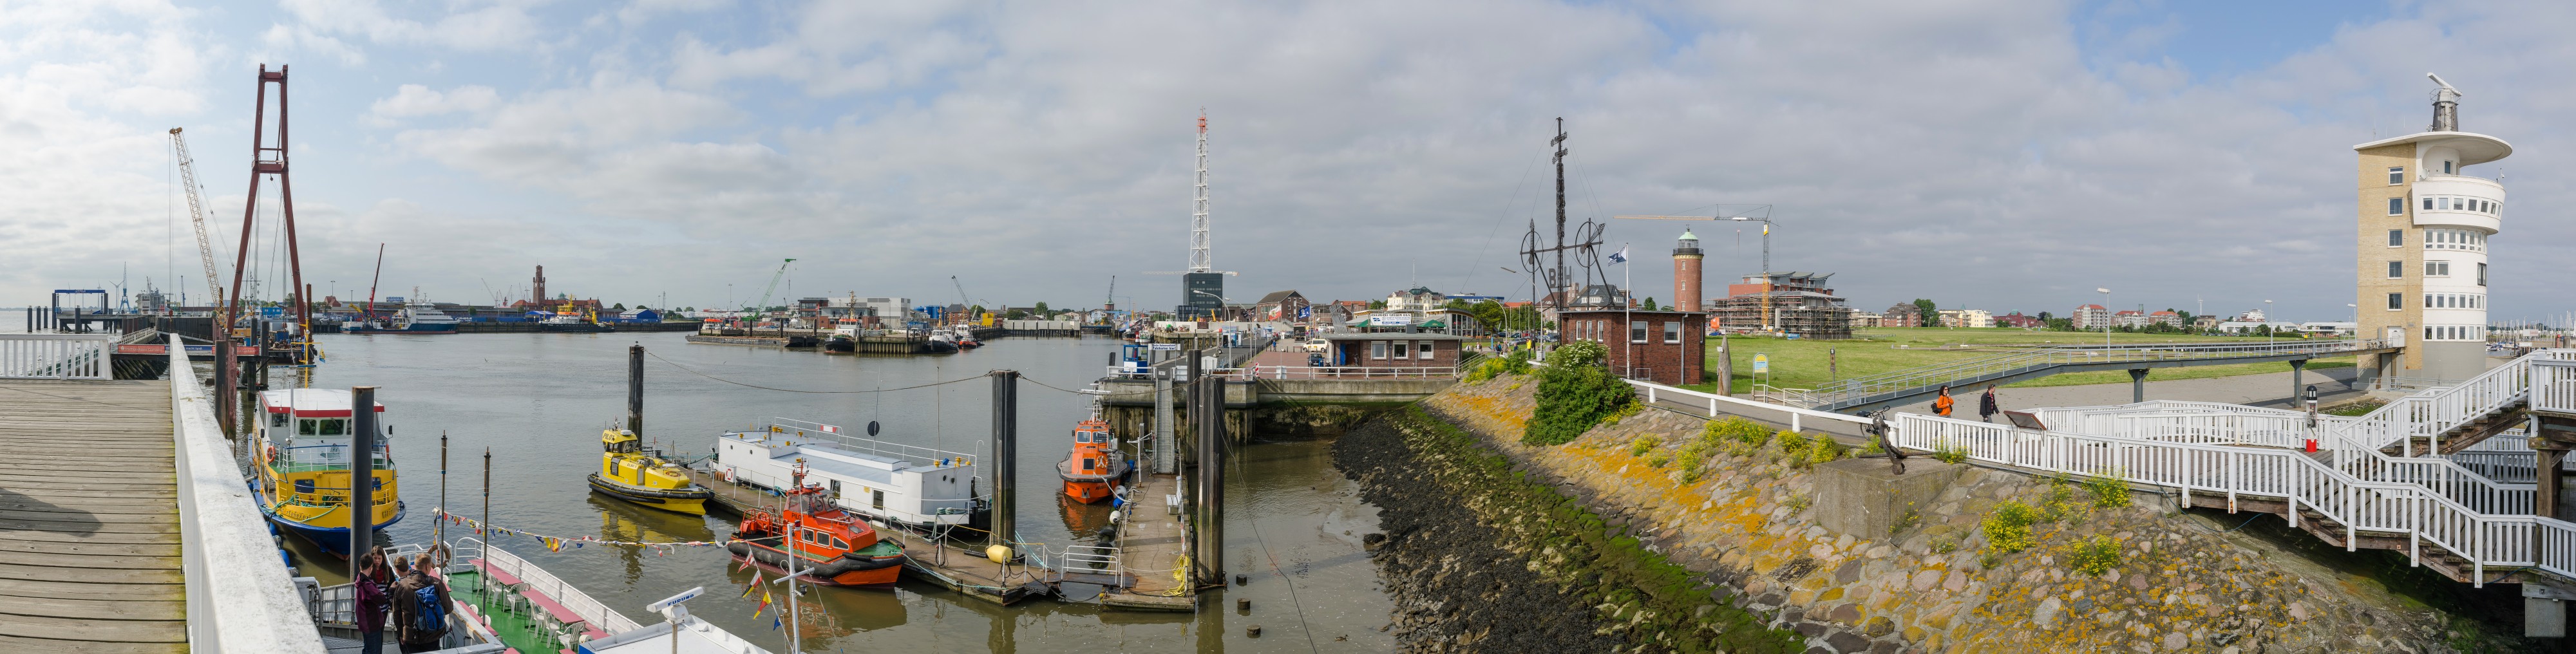 Panorama Hafen Cuxhaven Alte Liebe 2013